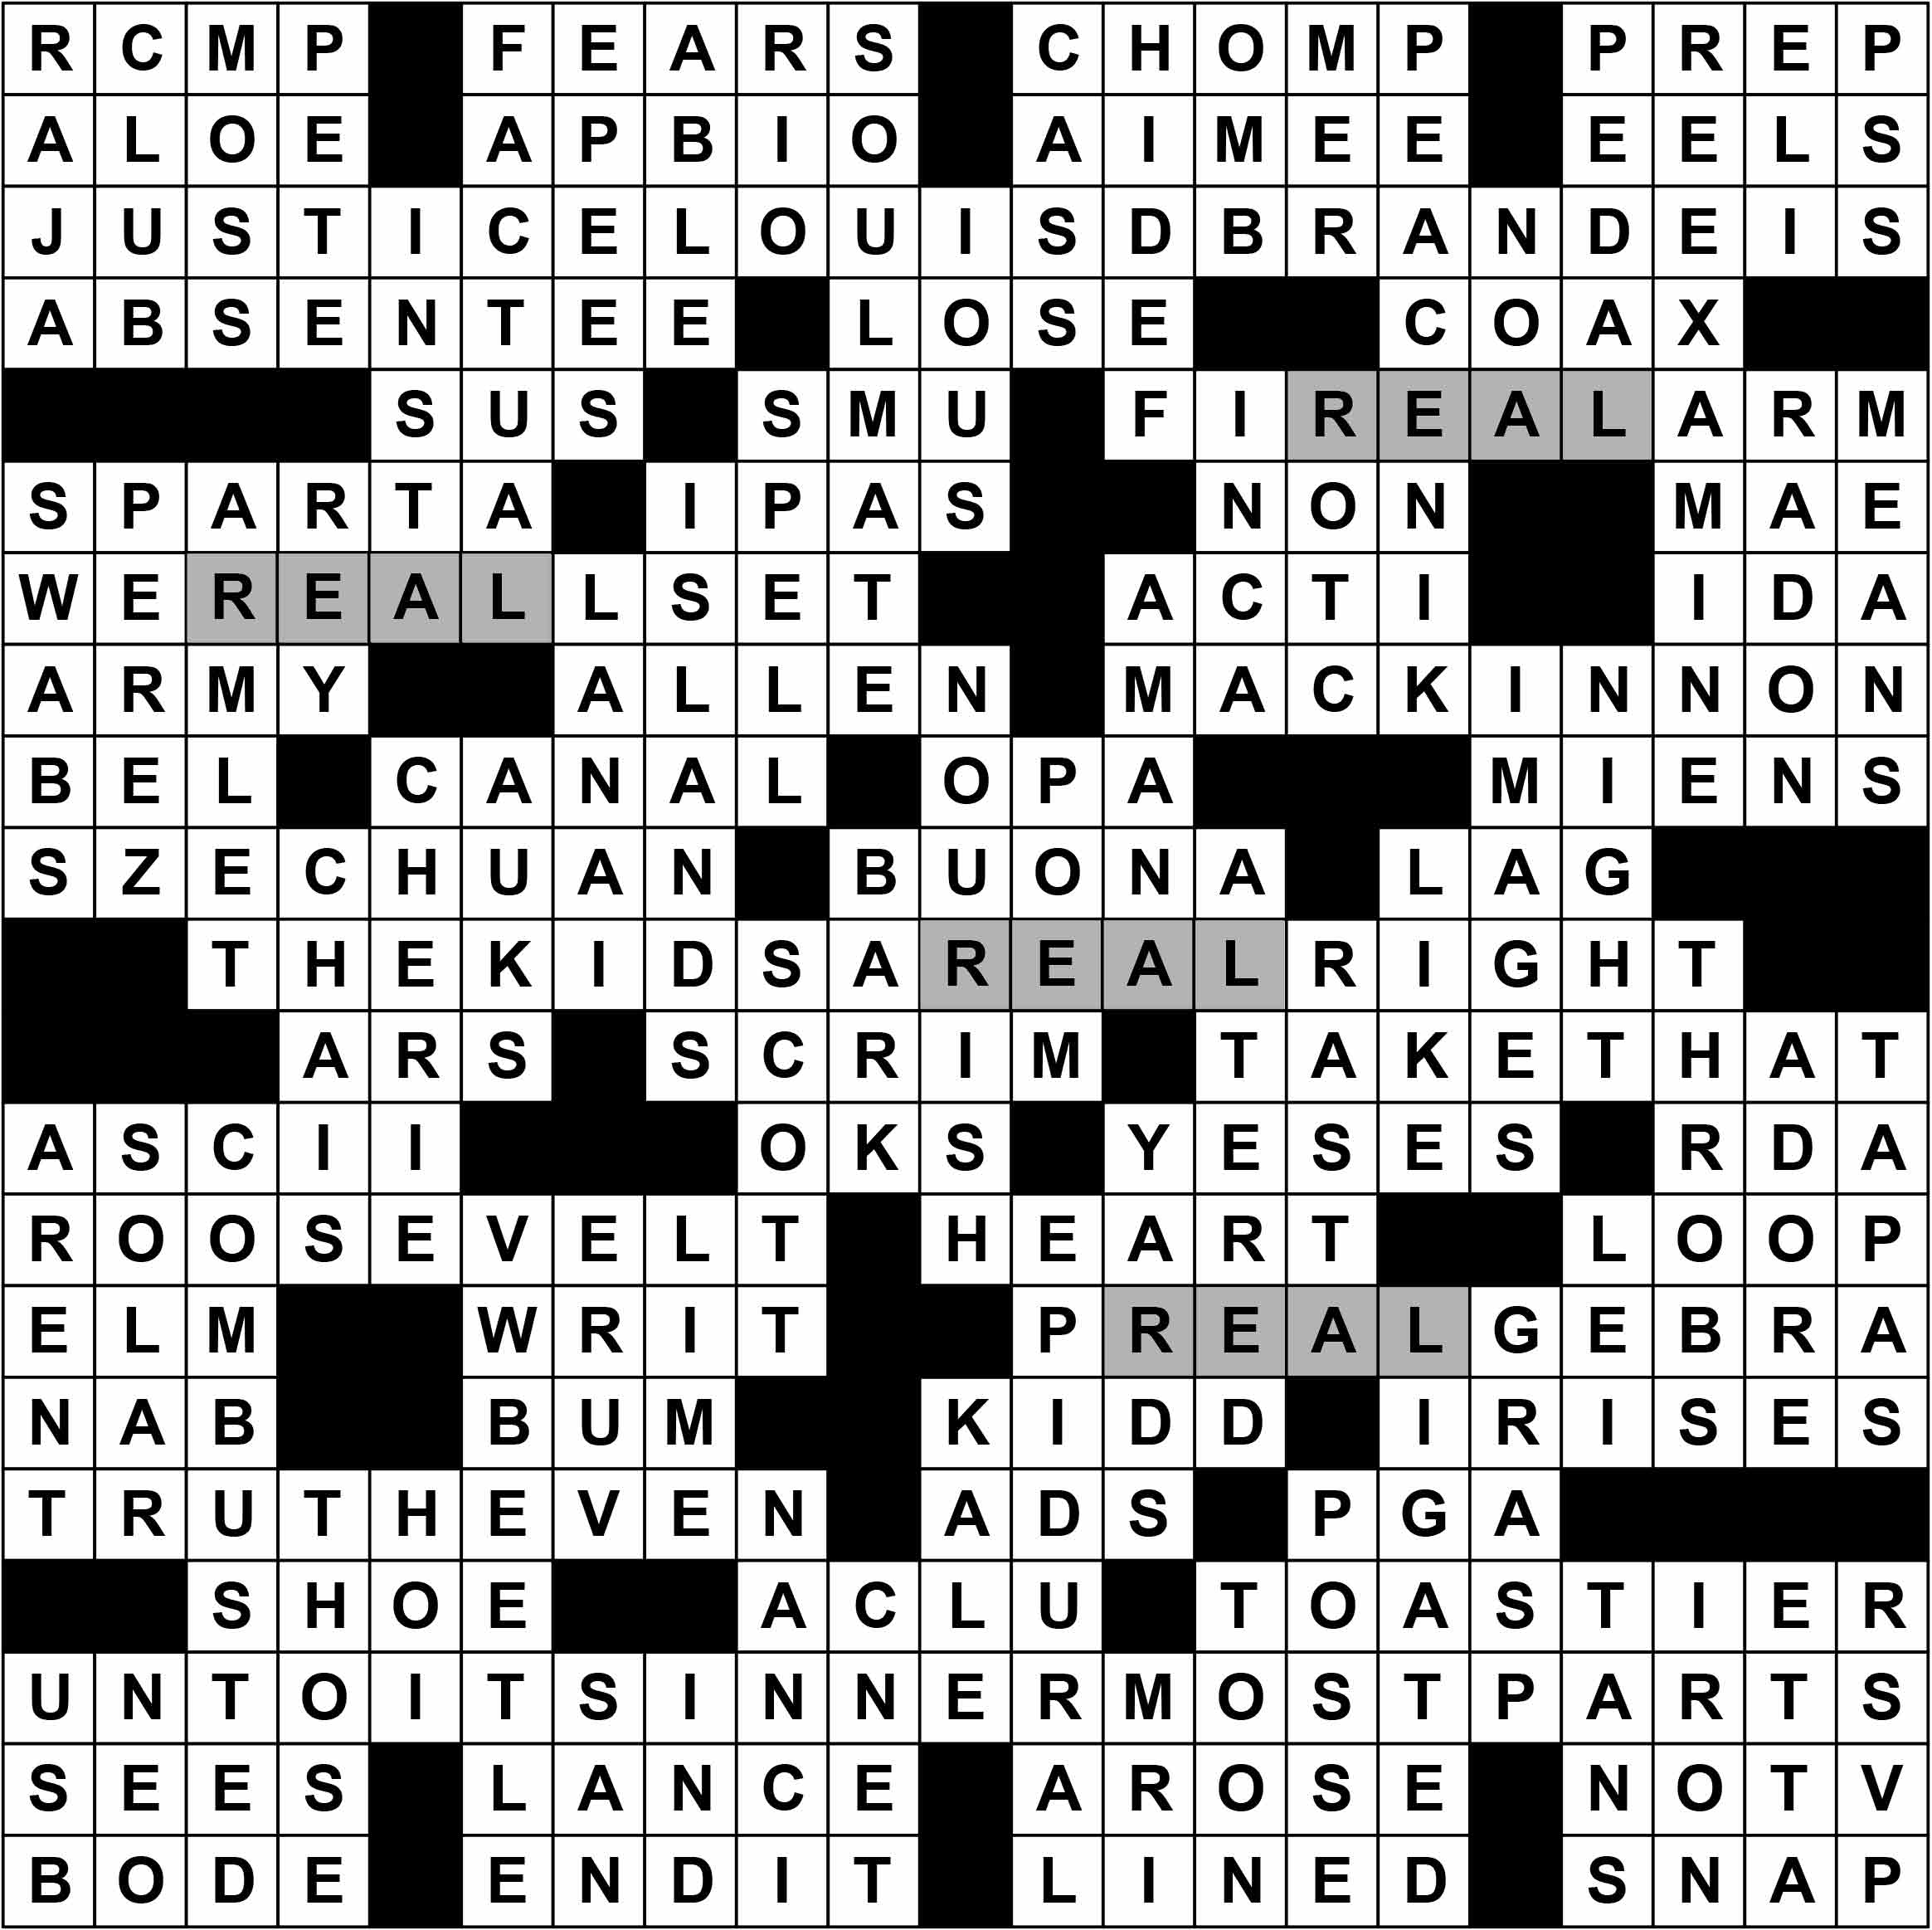 Crossword puzzle solution